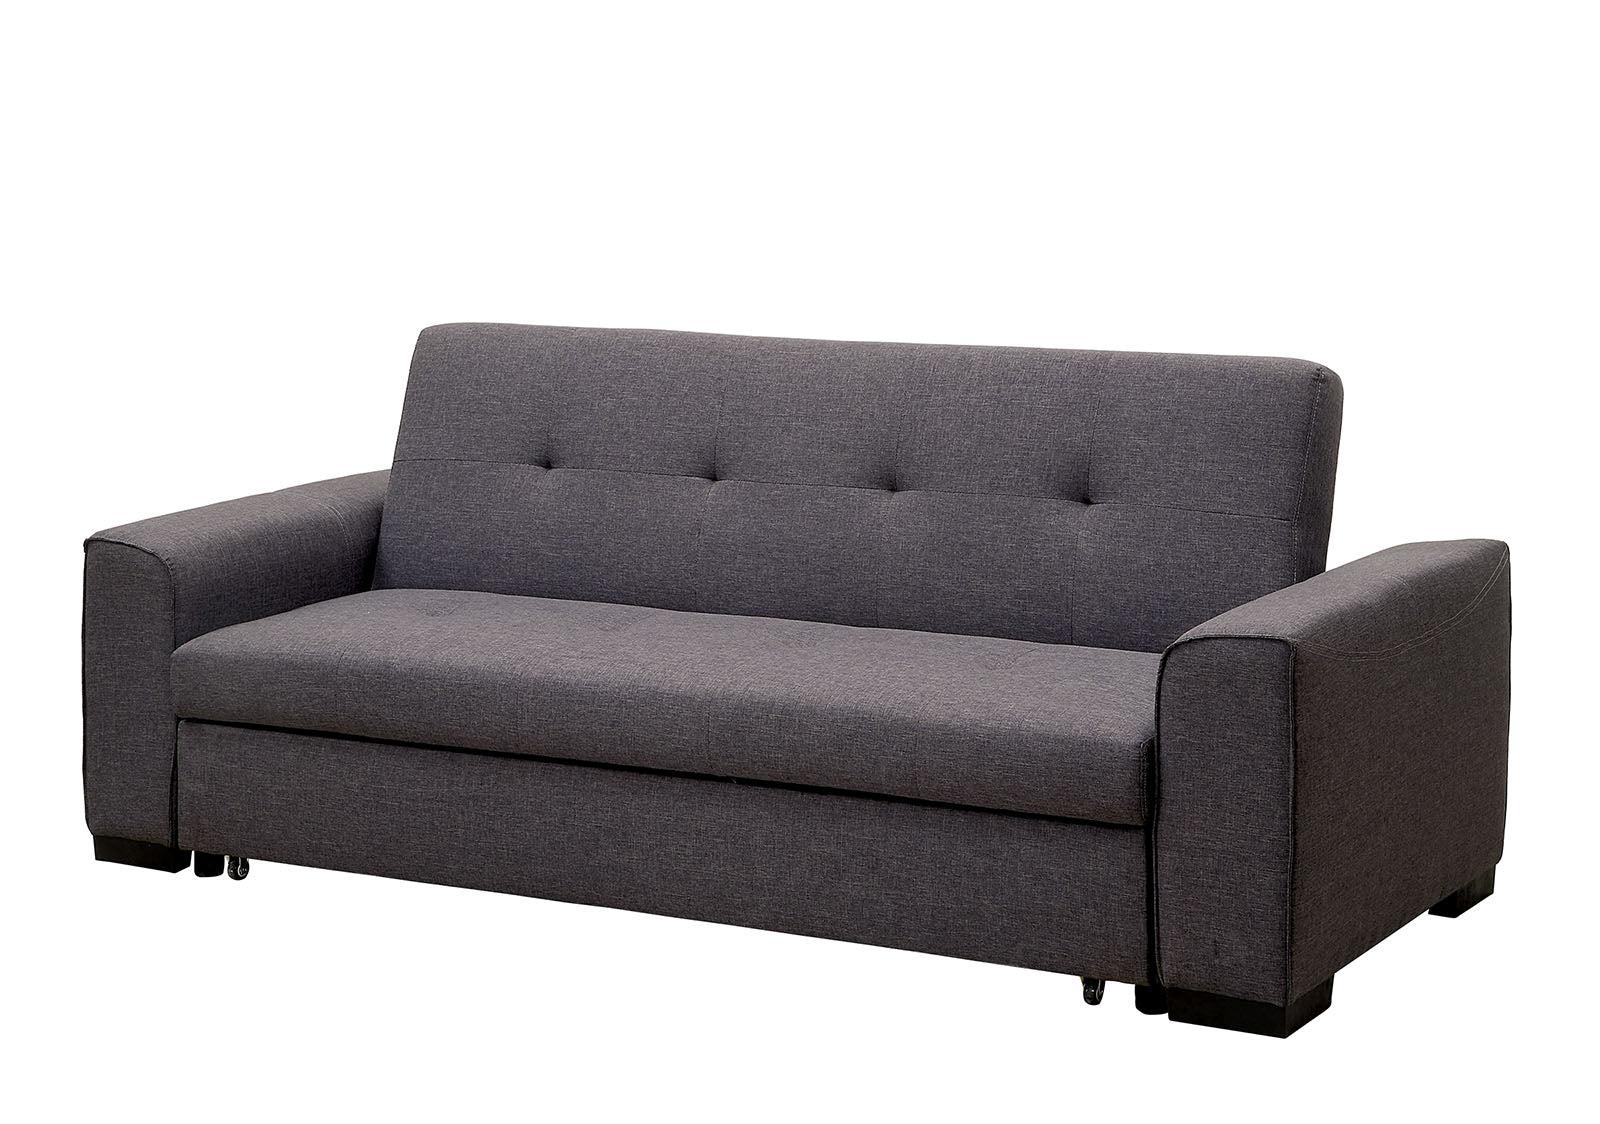 Furniture of America REILLY CM2815 Futon sofa